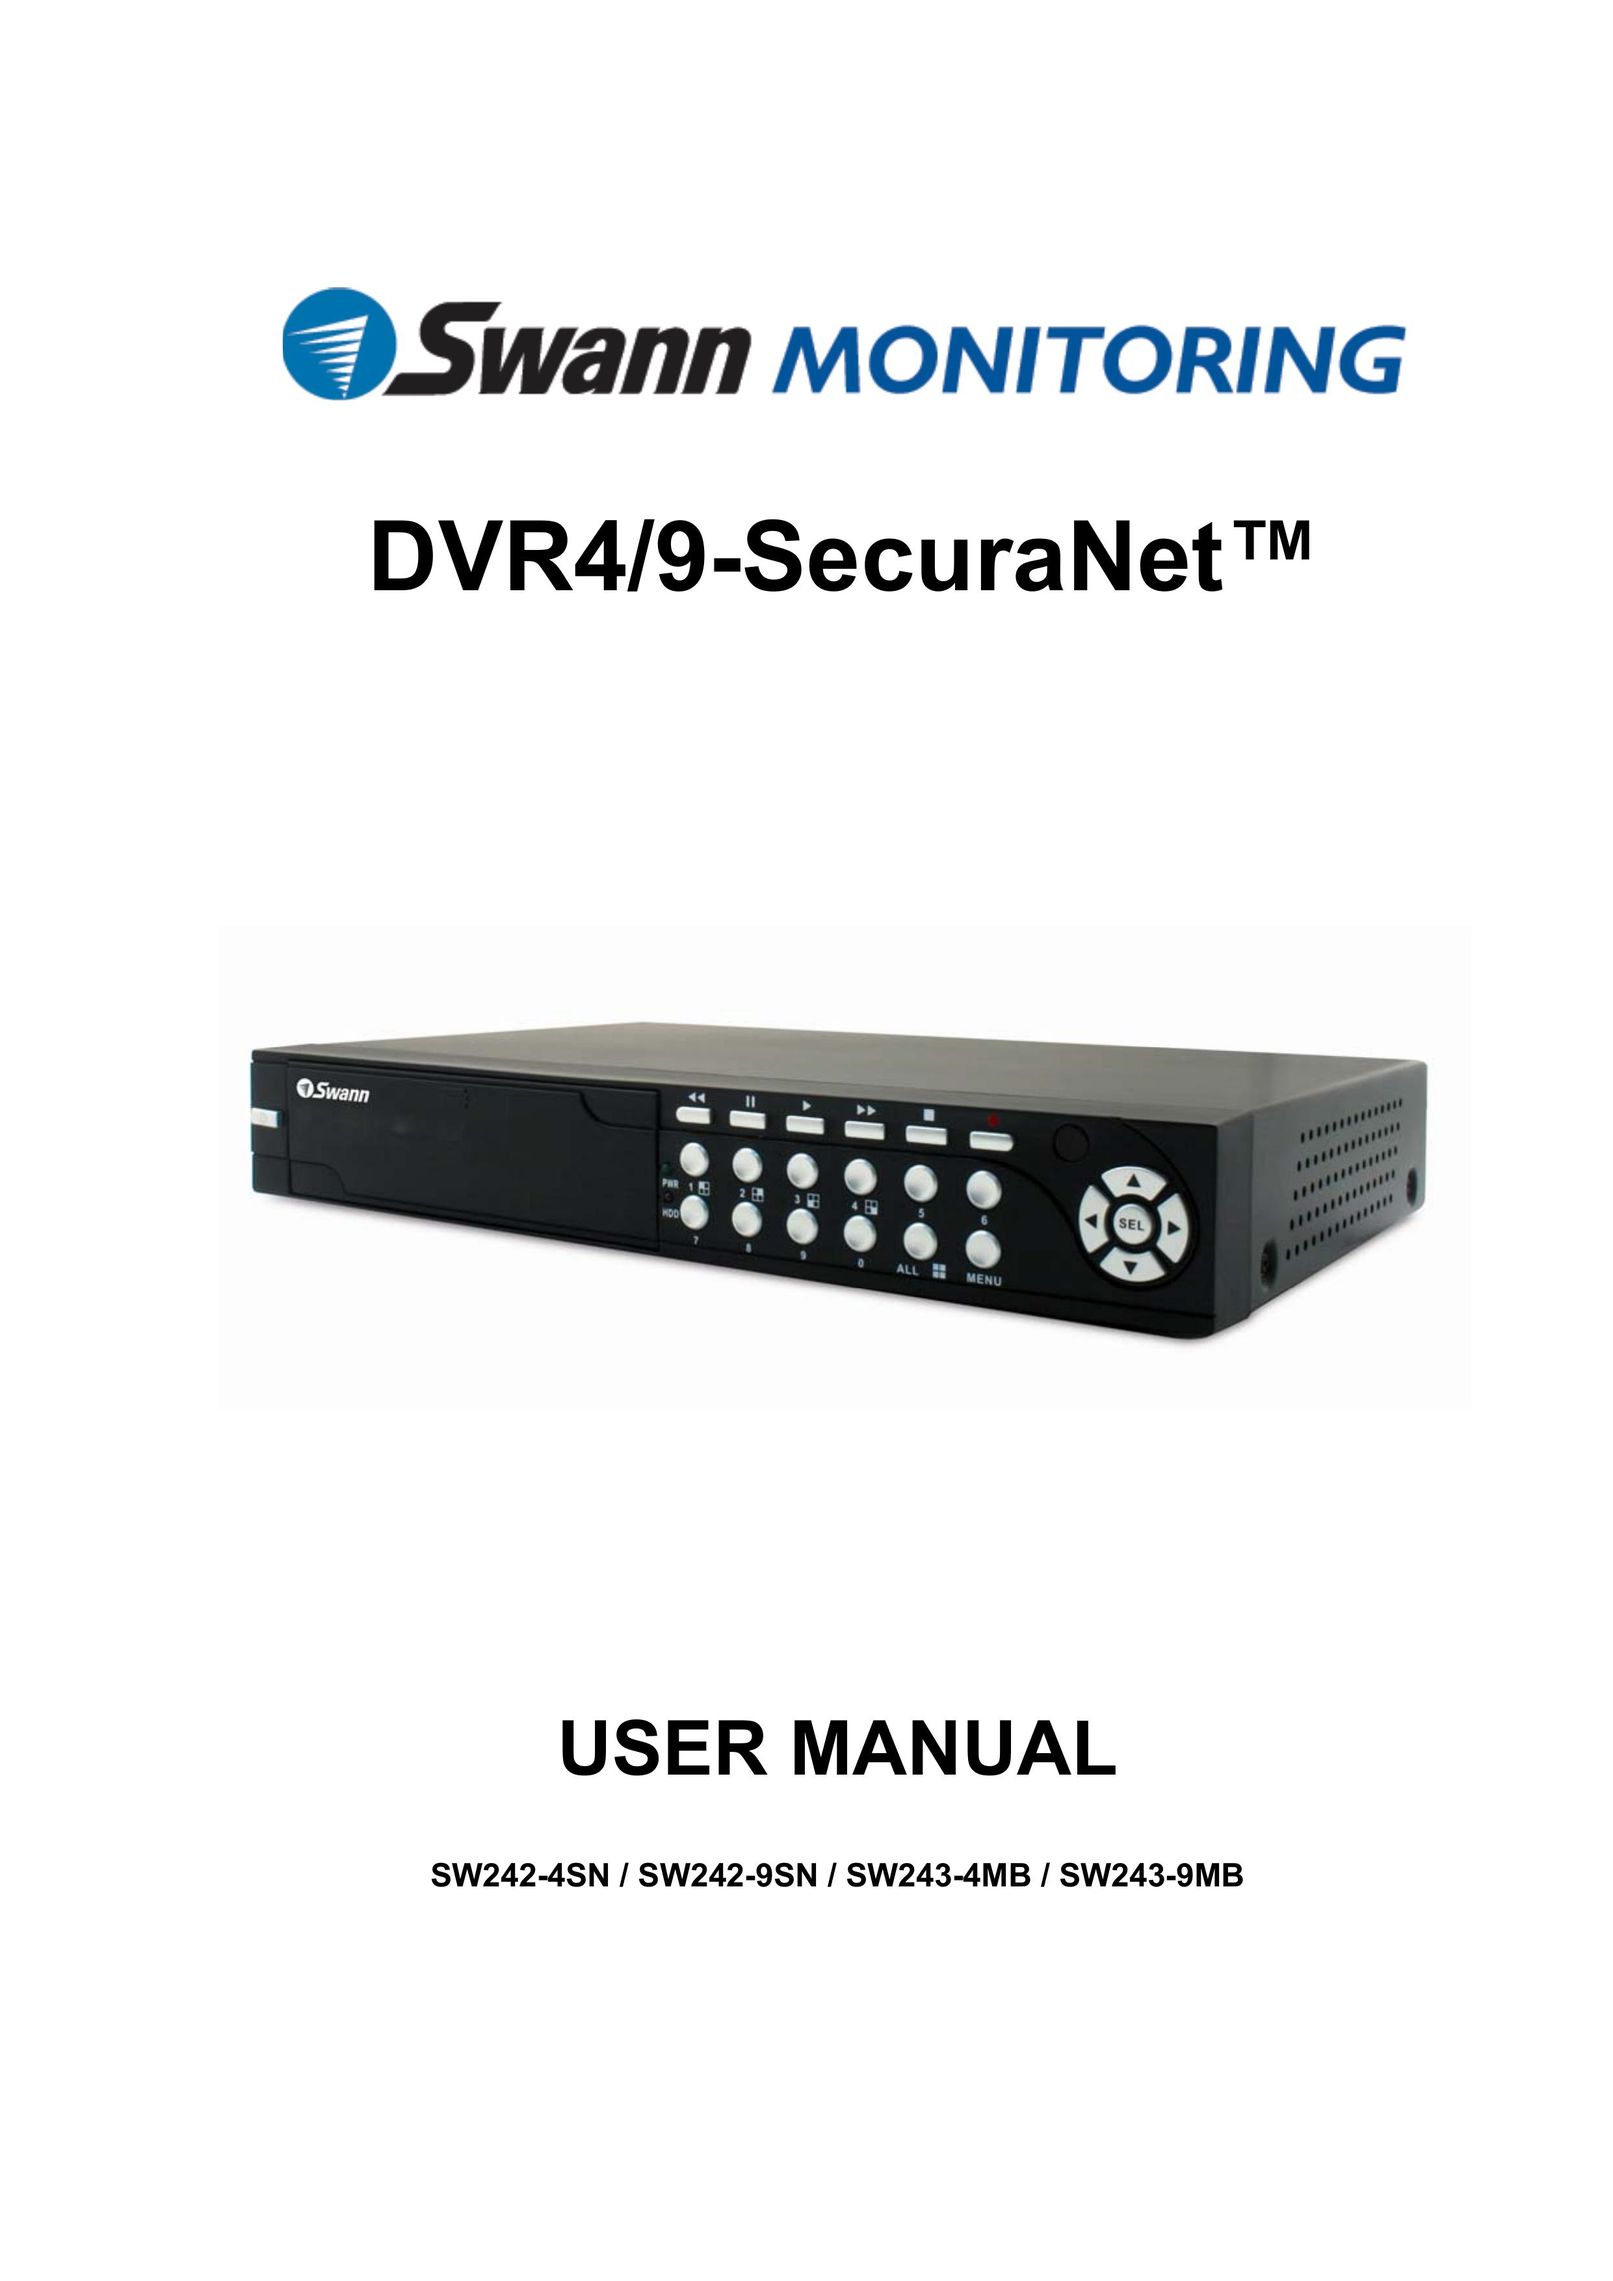 Swann SW243-4MB DVR User Manual